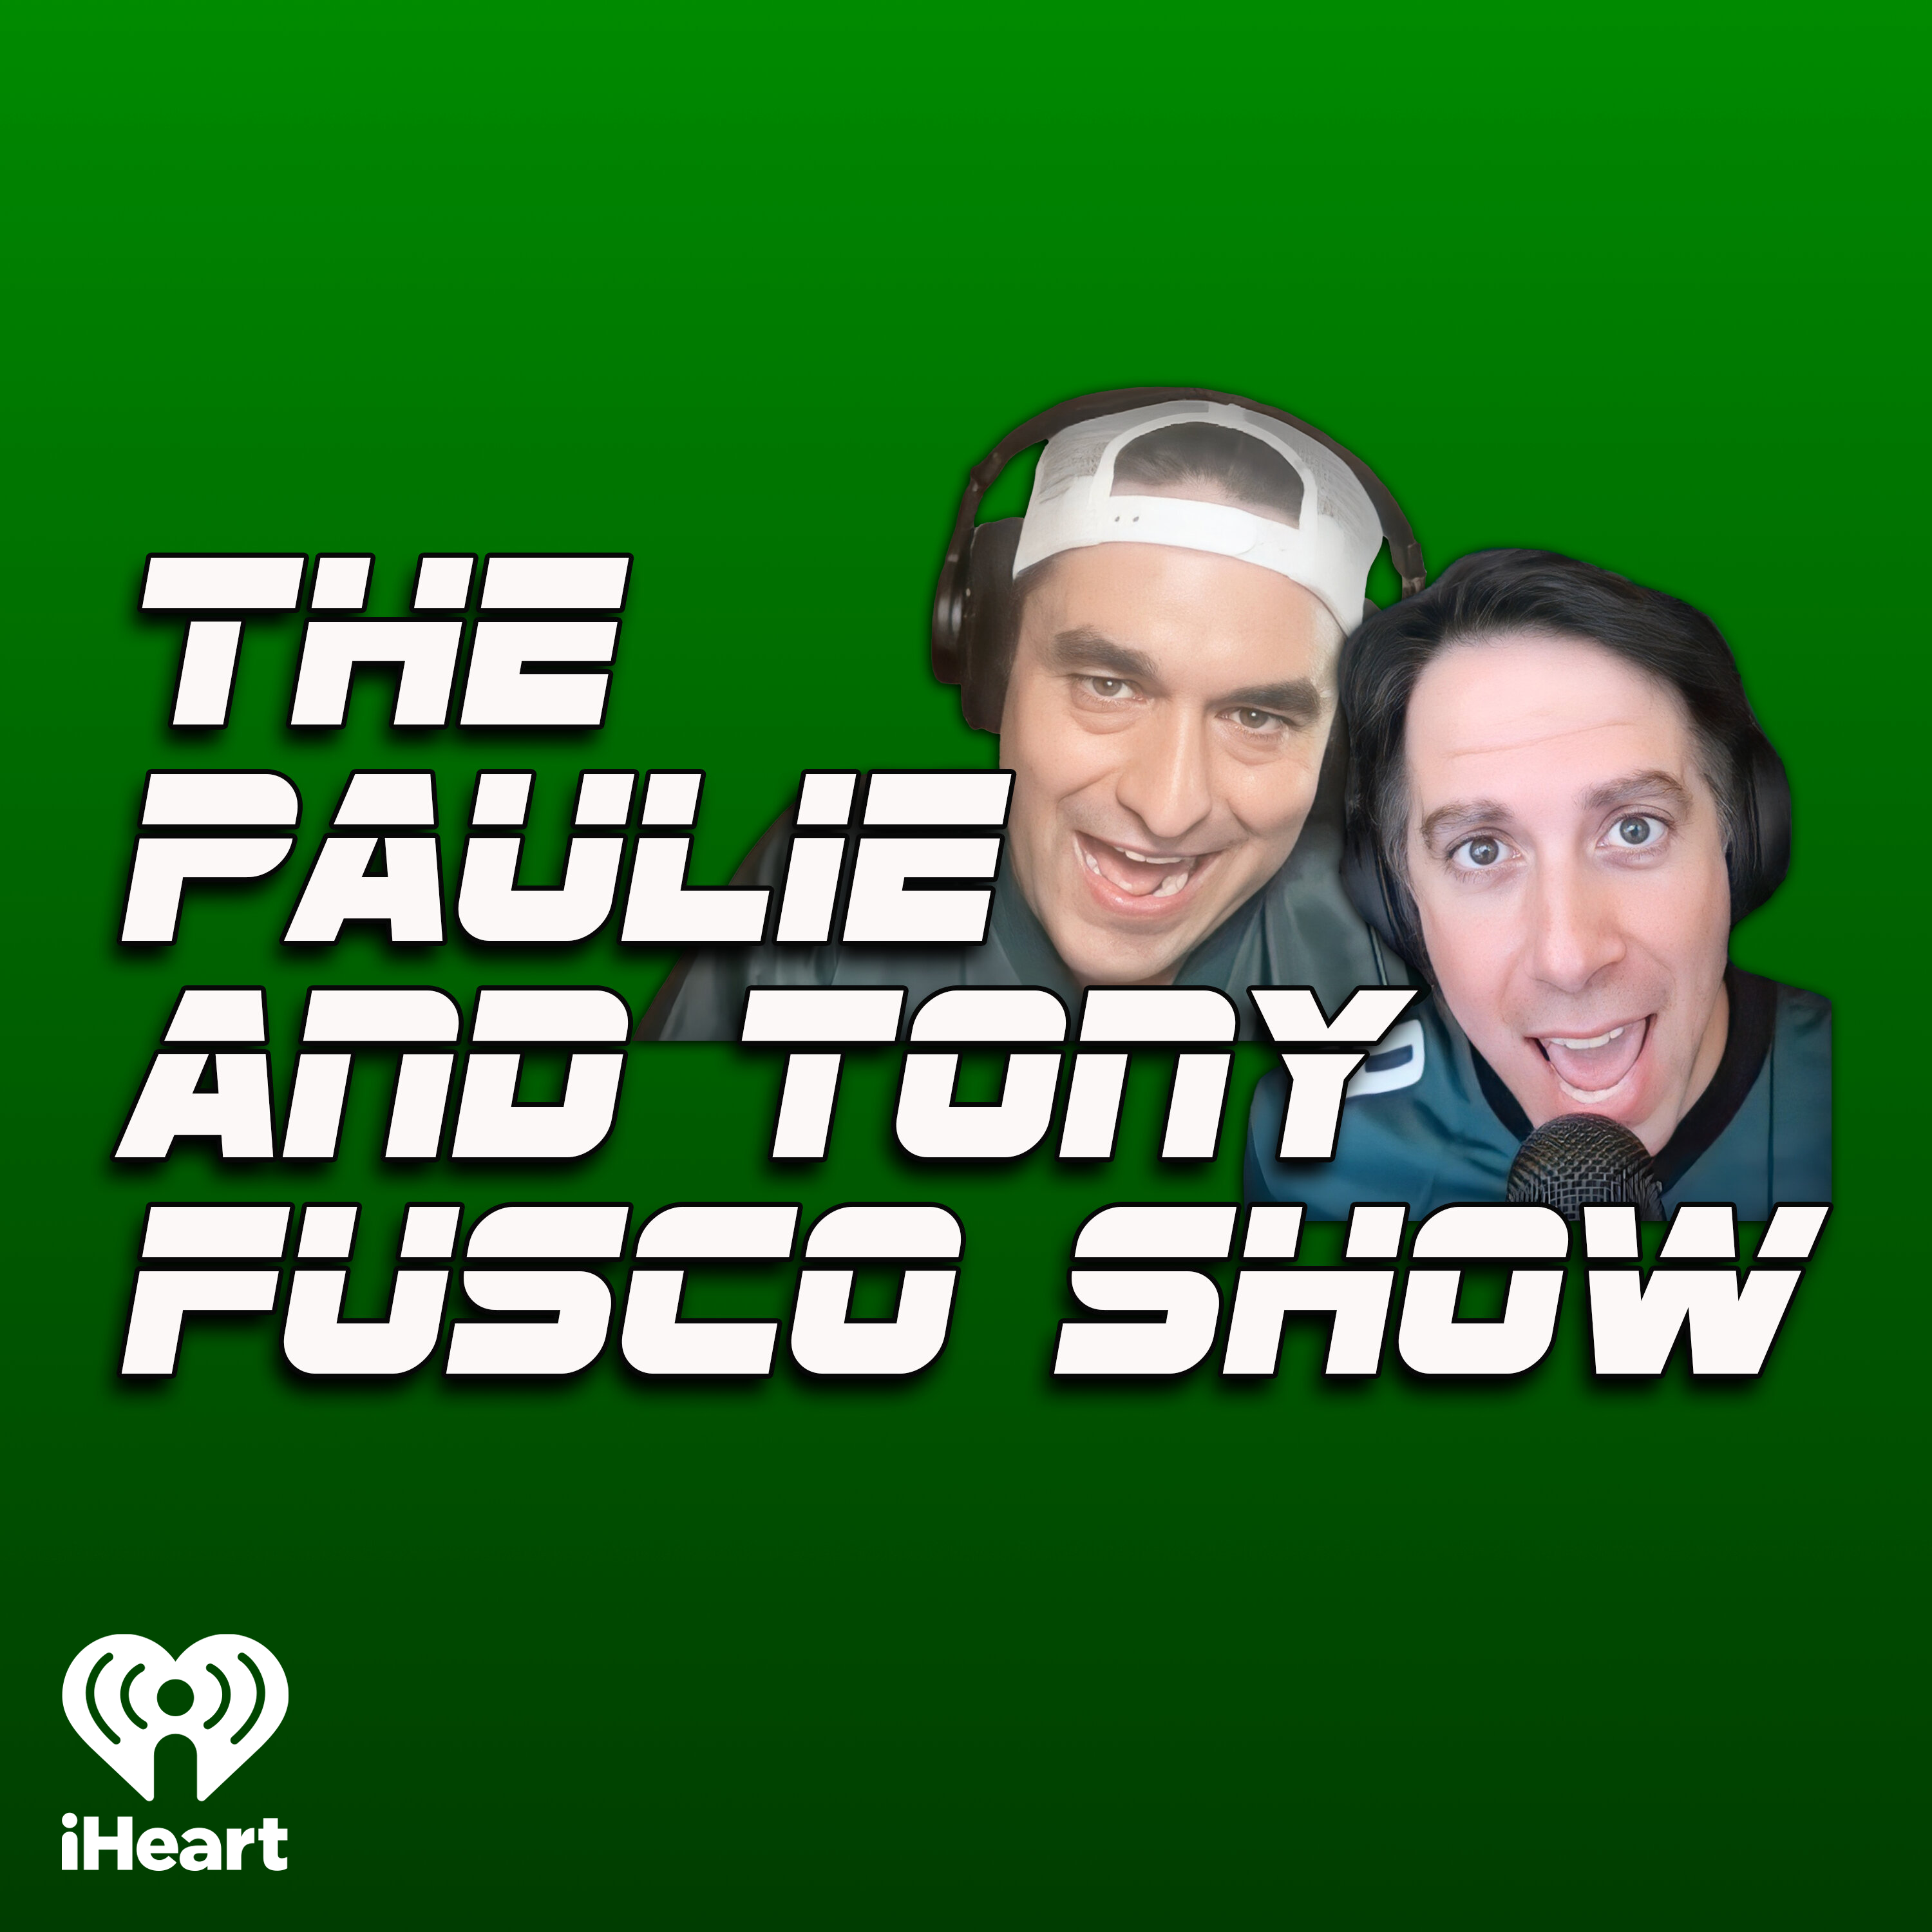 The Paulie & Tony Fusco Show: Young sports nerd GETS DESTROYED in NBA MVP debate